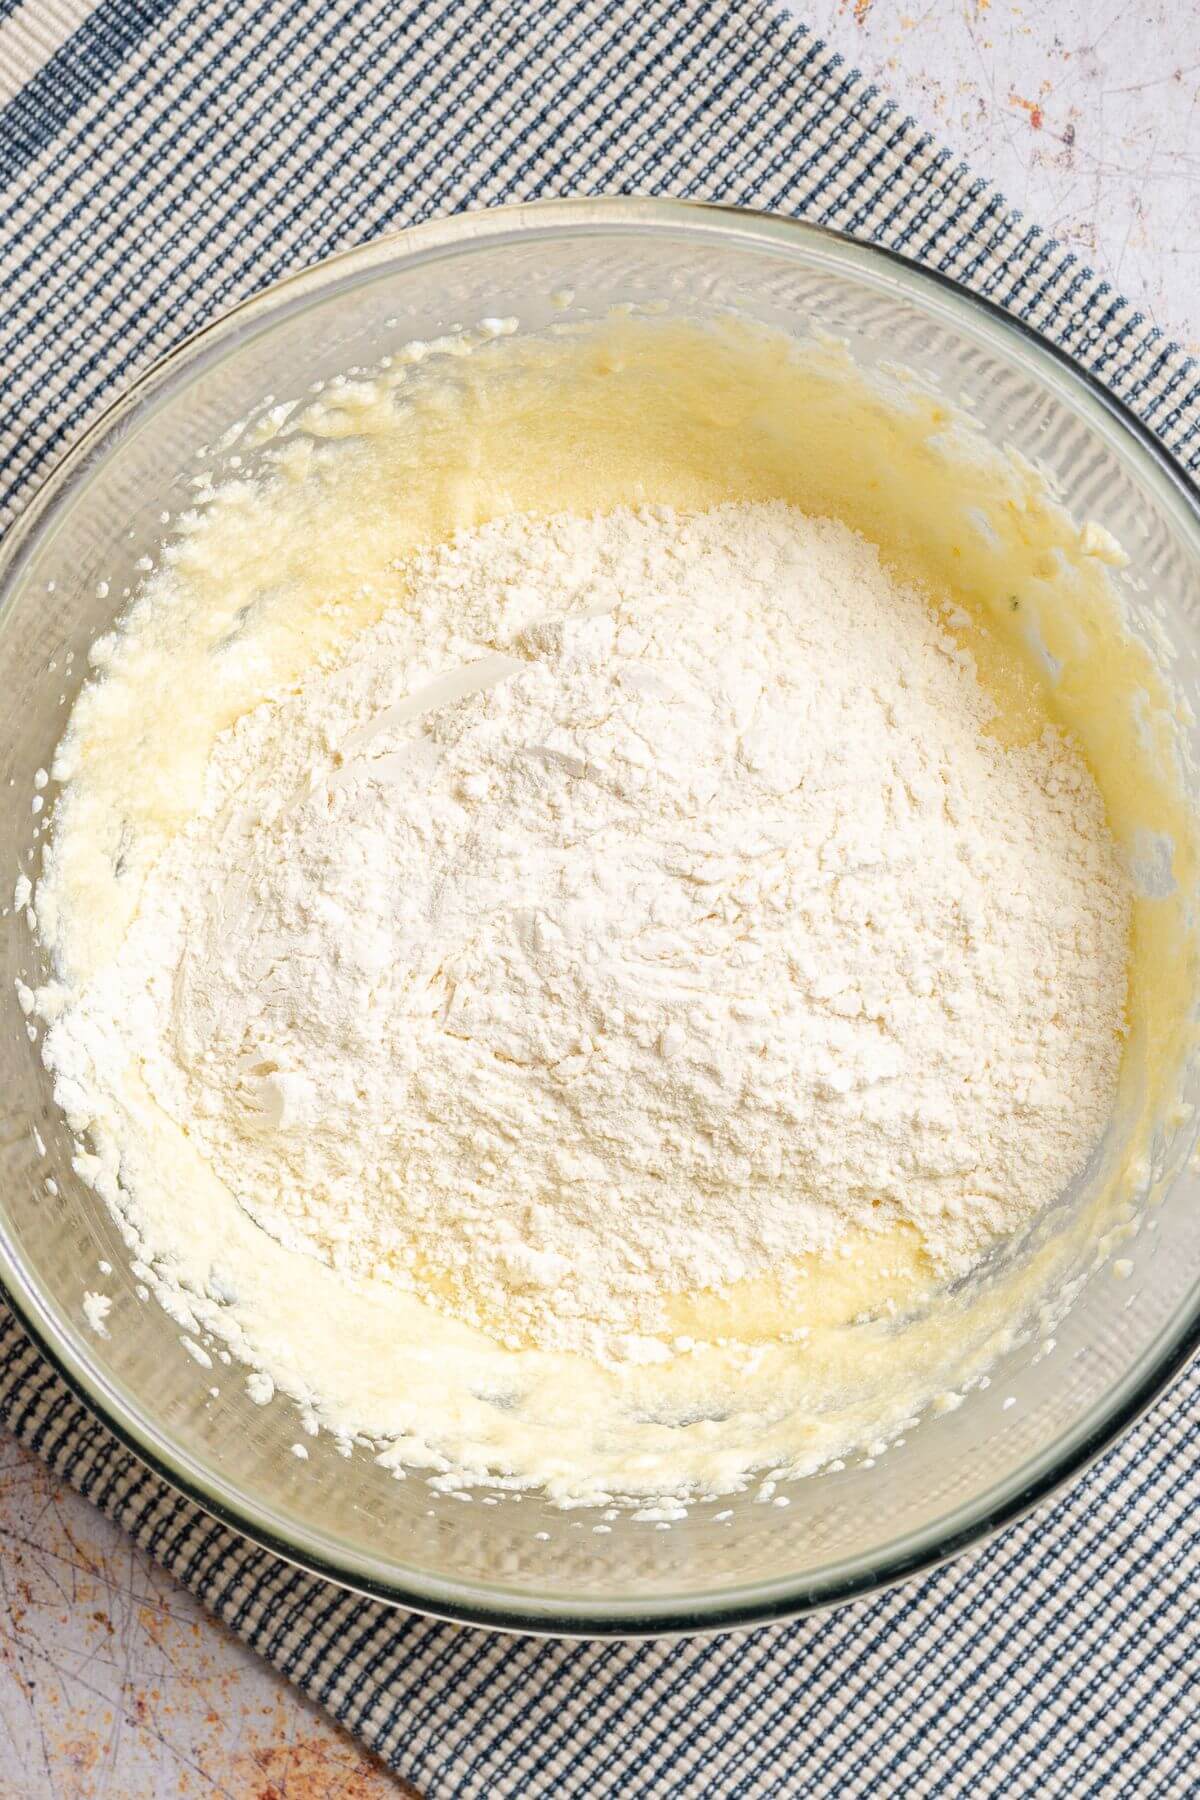 Flour mixture added to wet mixture.